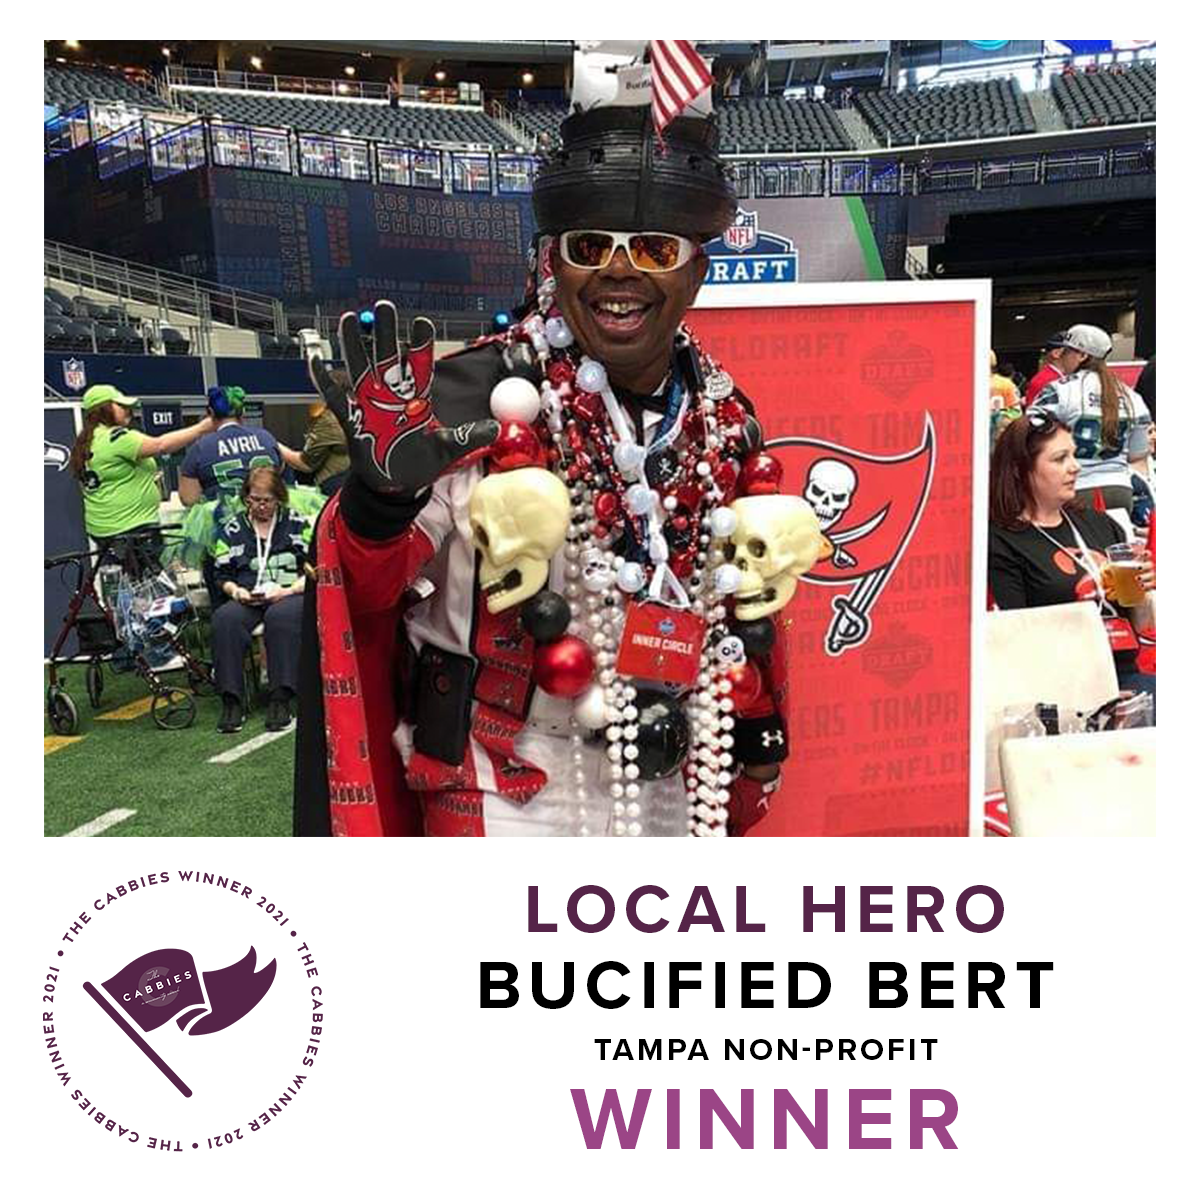 local hero winner - bucified bert